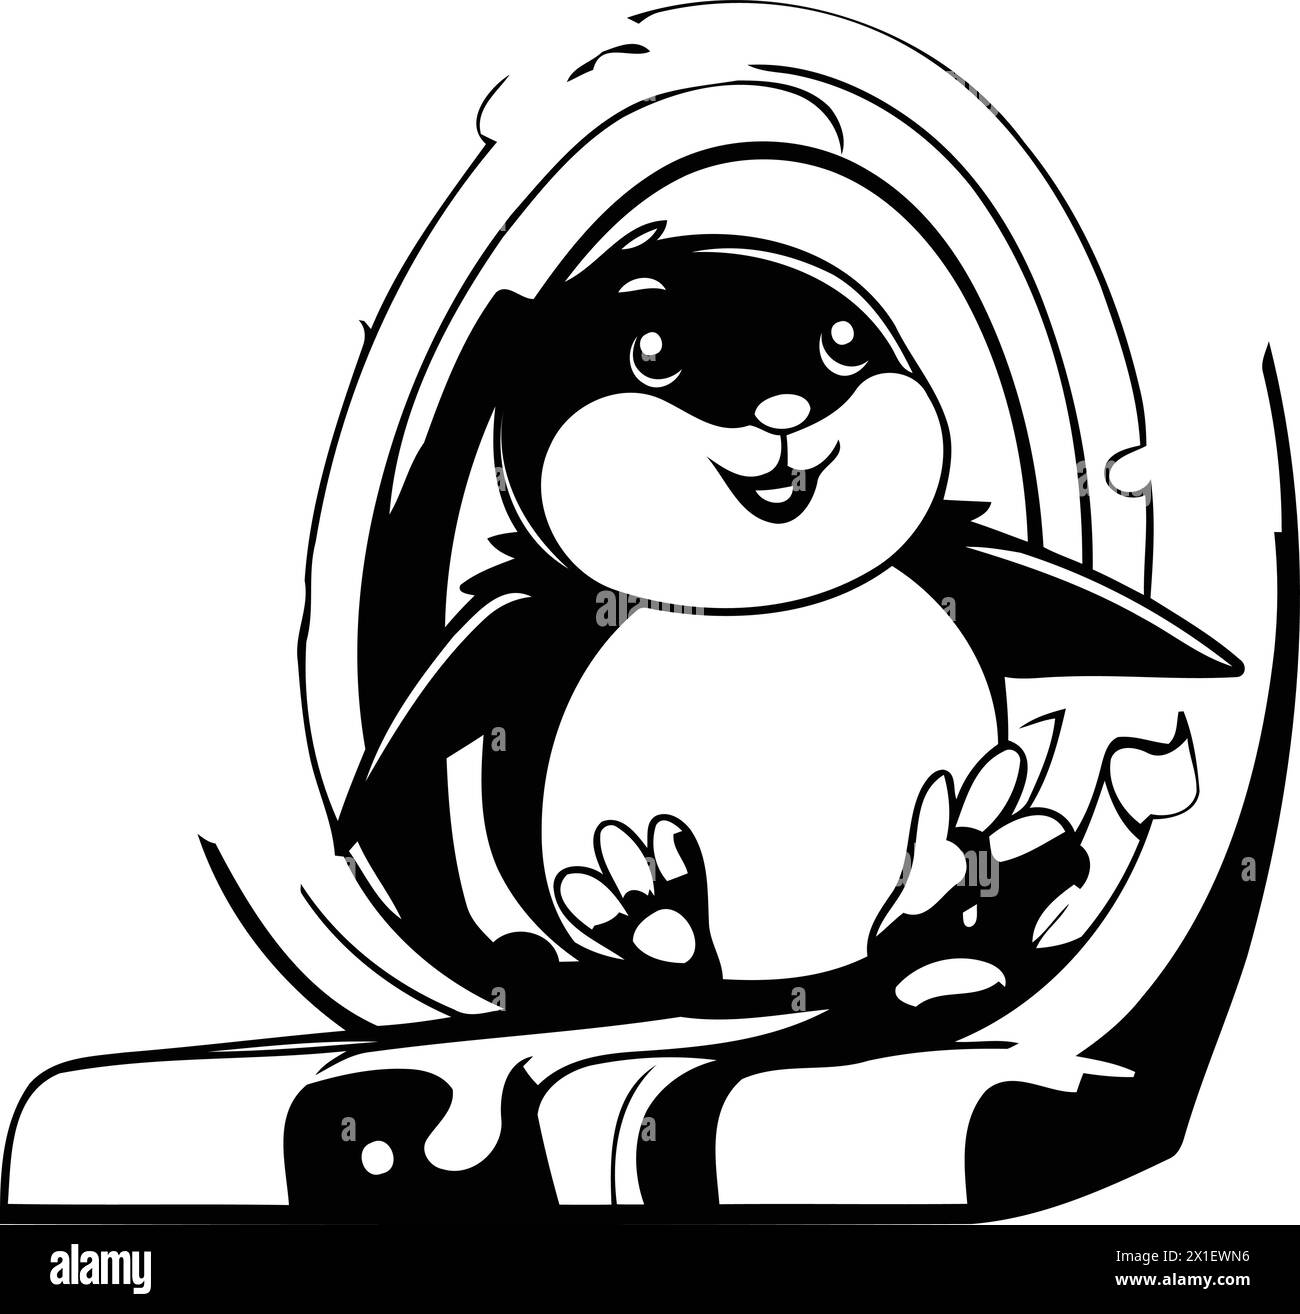 Cute cartoon penguin on a rainbow background. Vector illustration. Stock Vector